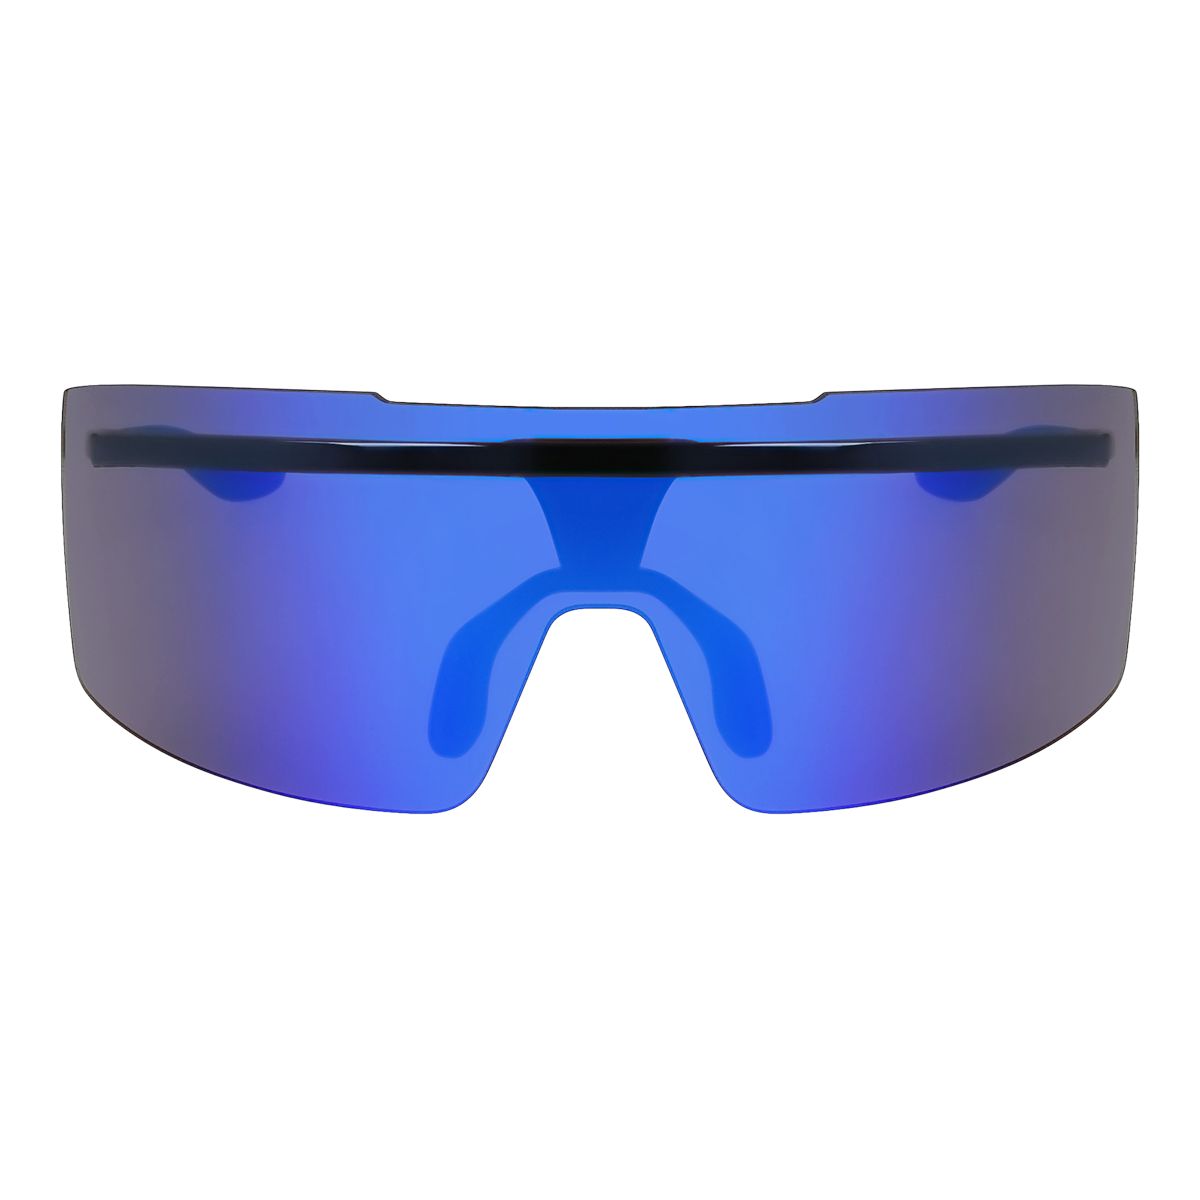 Nike Echo Shield Sunglasses | SportChek